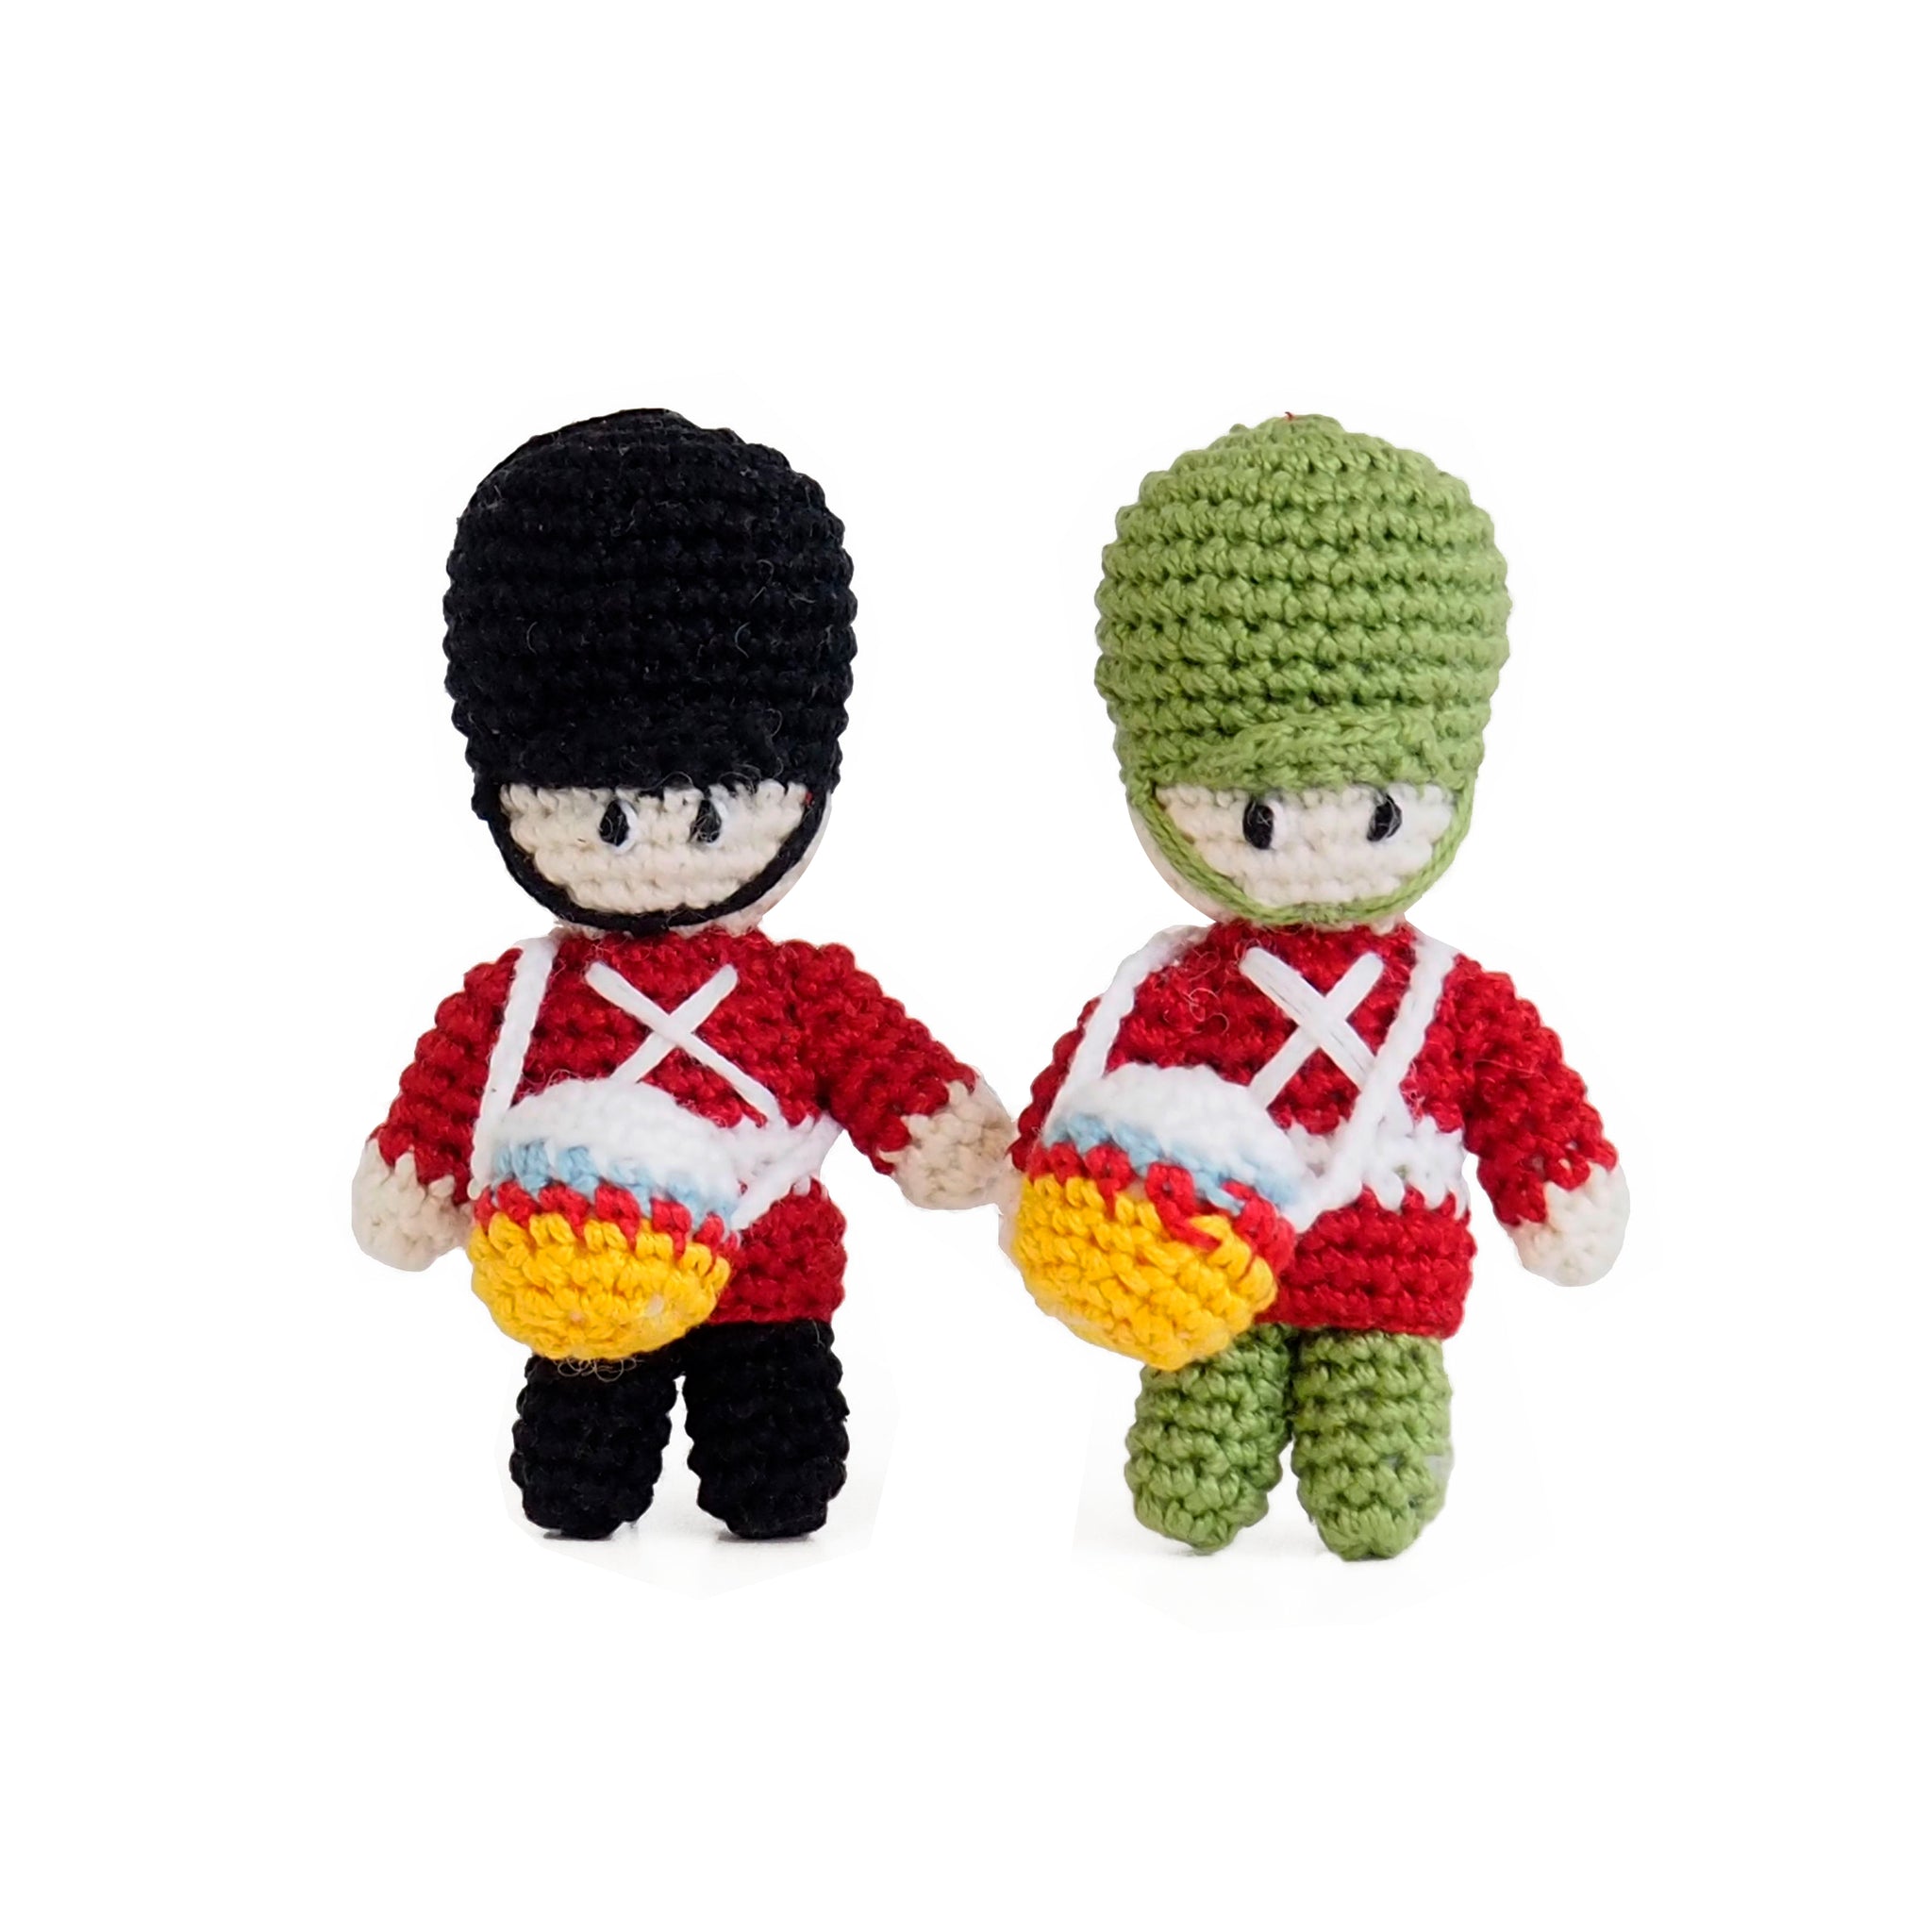 Crochet Drummer Boy Ornaments- set of 2